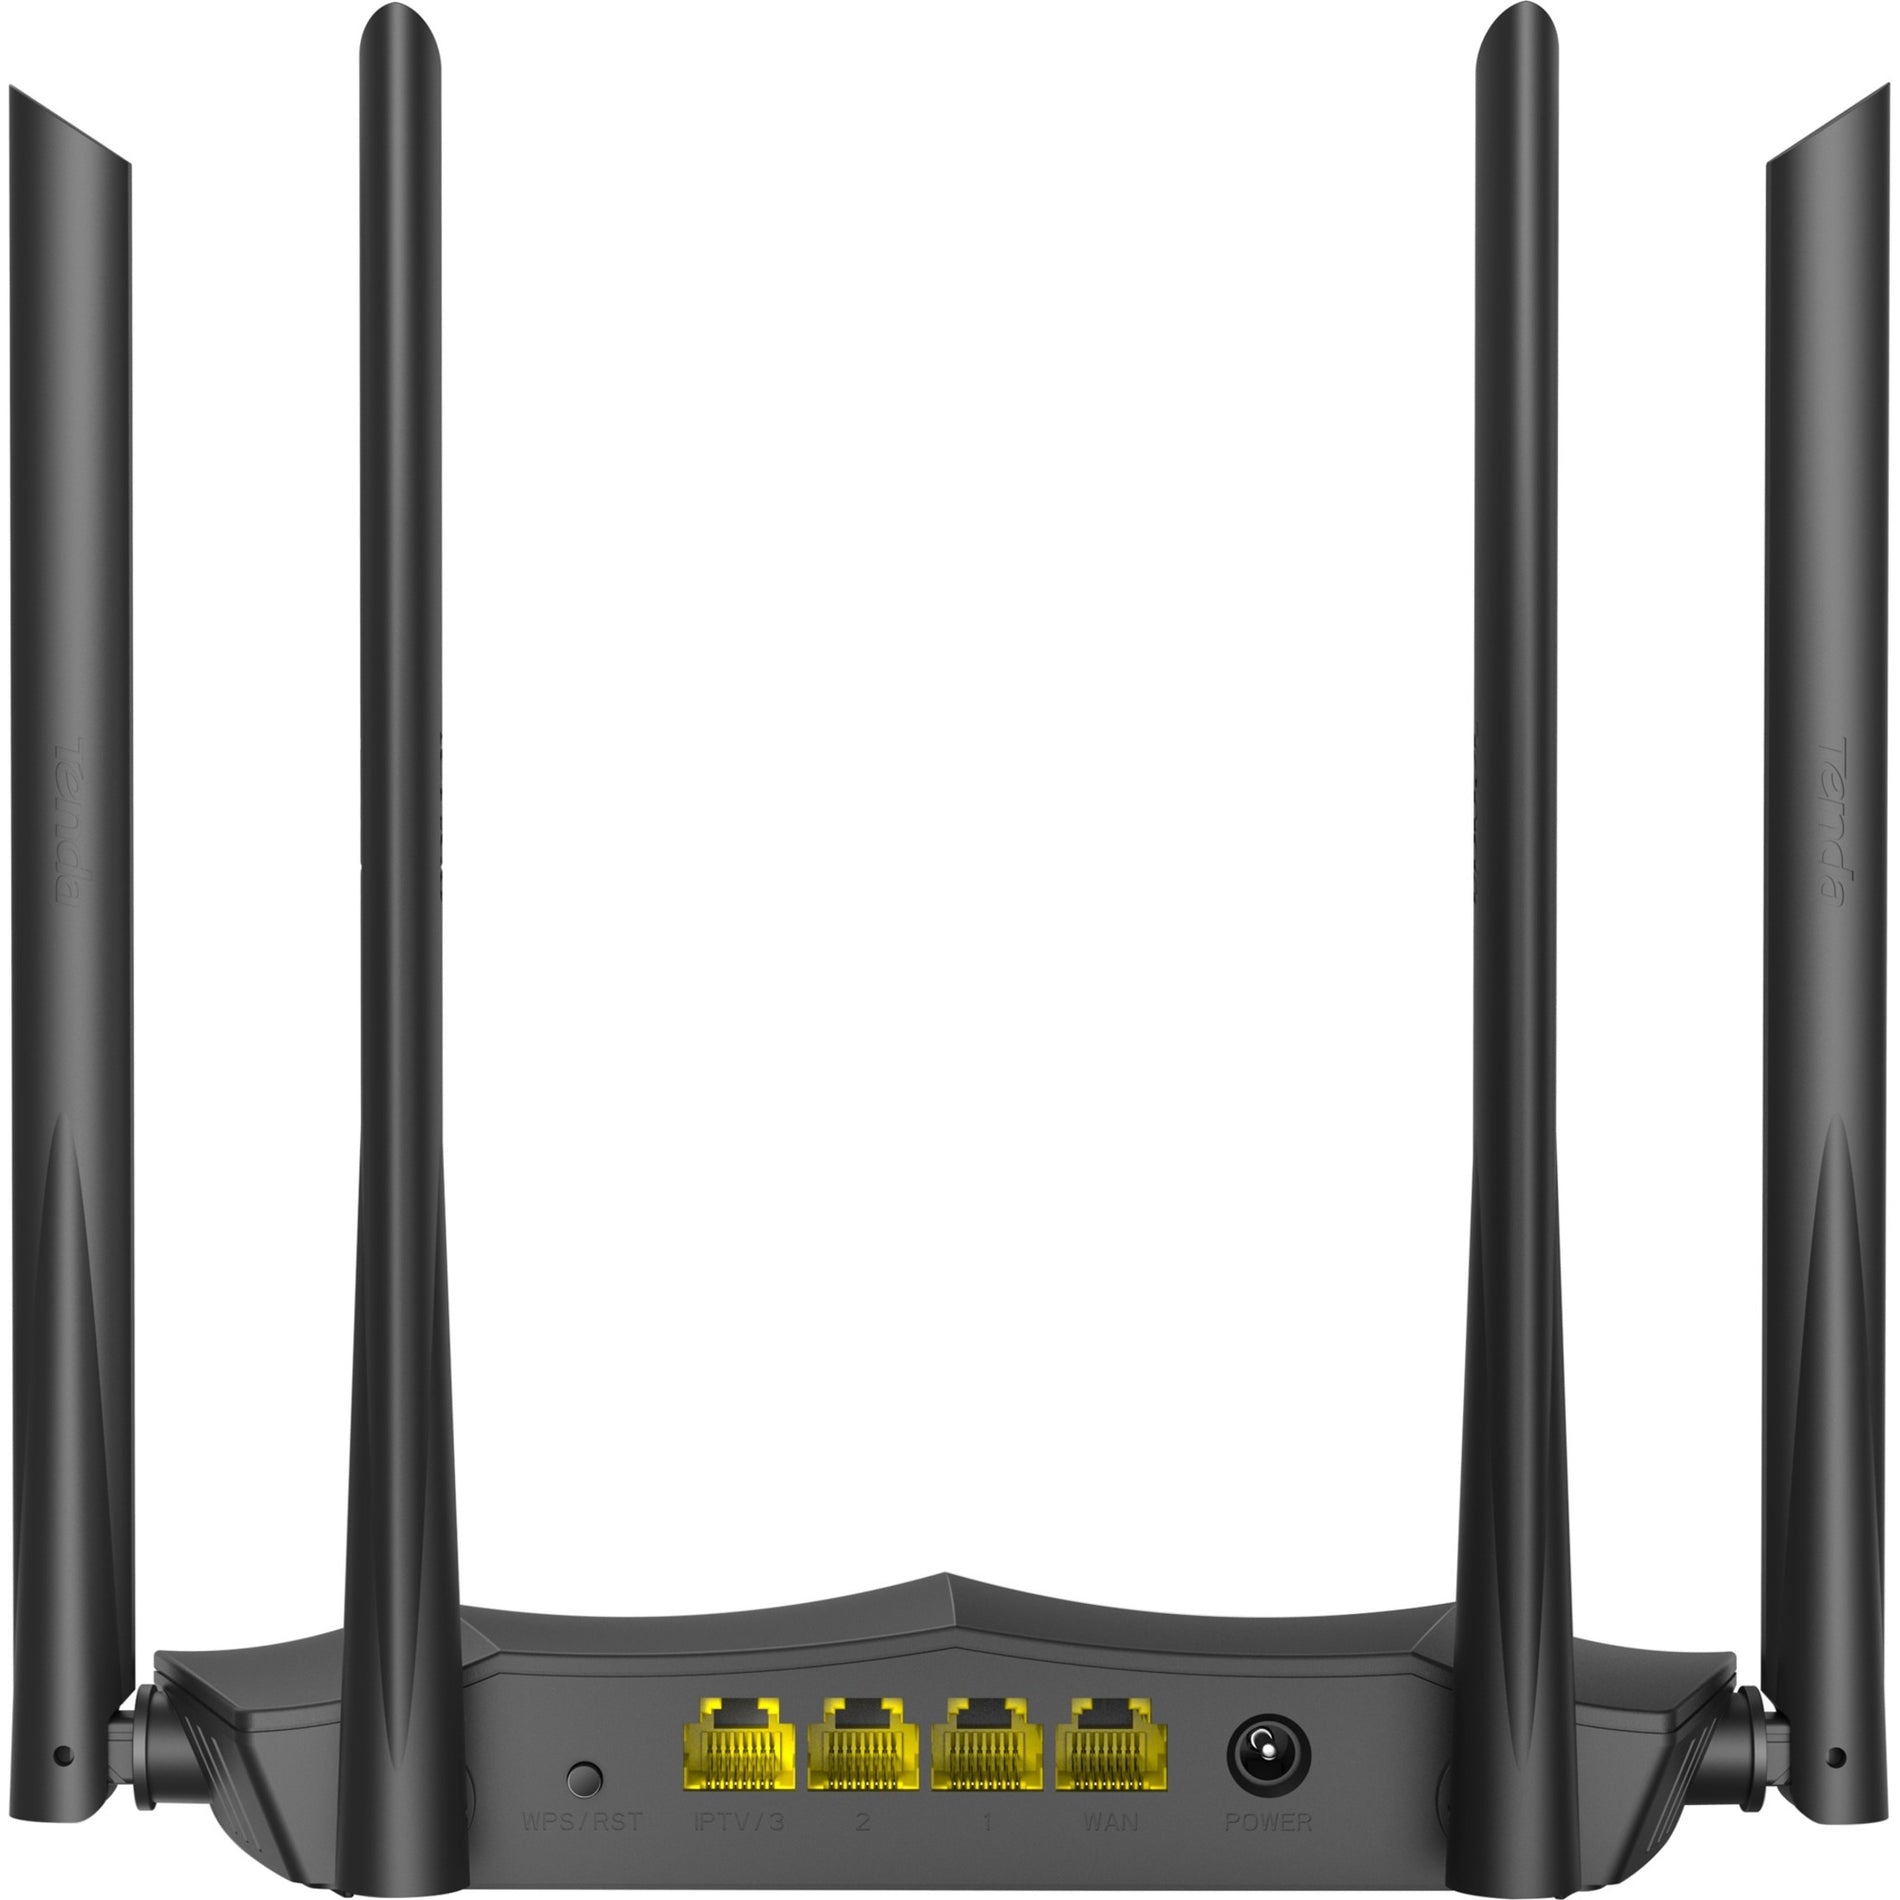 Tenda AC8 AC1200 Dual-band Gigabit Wireless Router, Wi-Fi 5, 150 MB/s